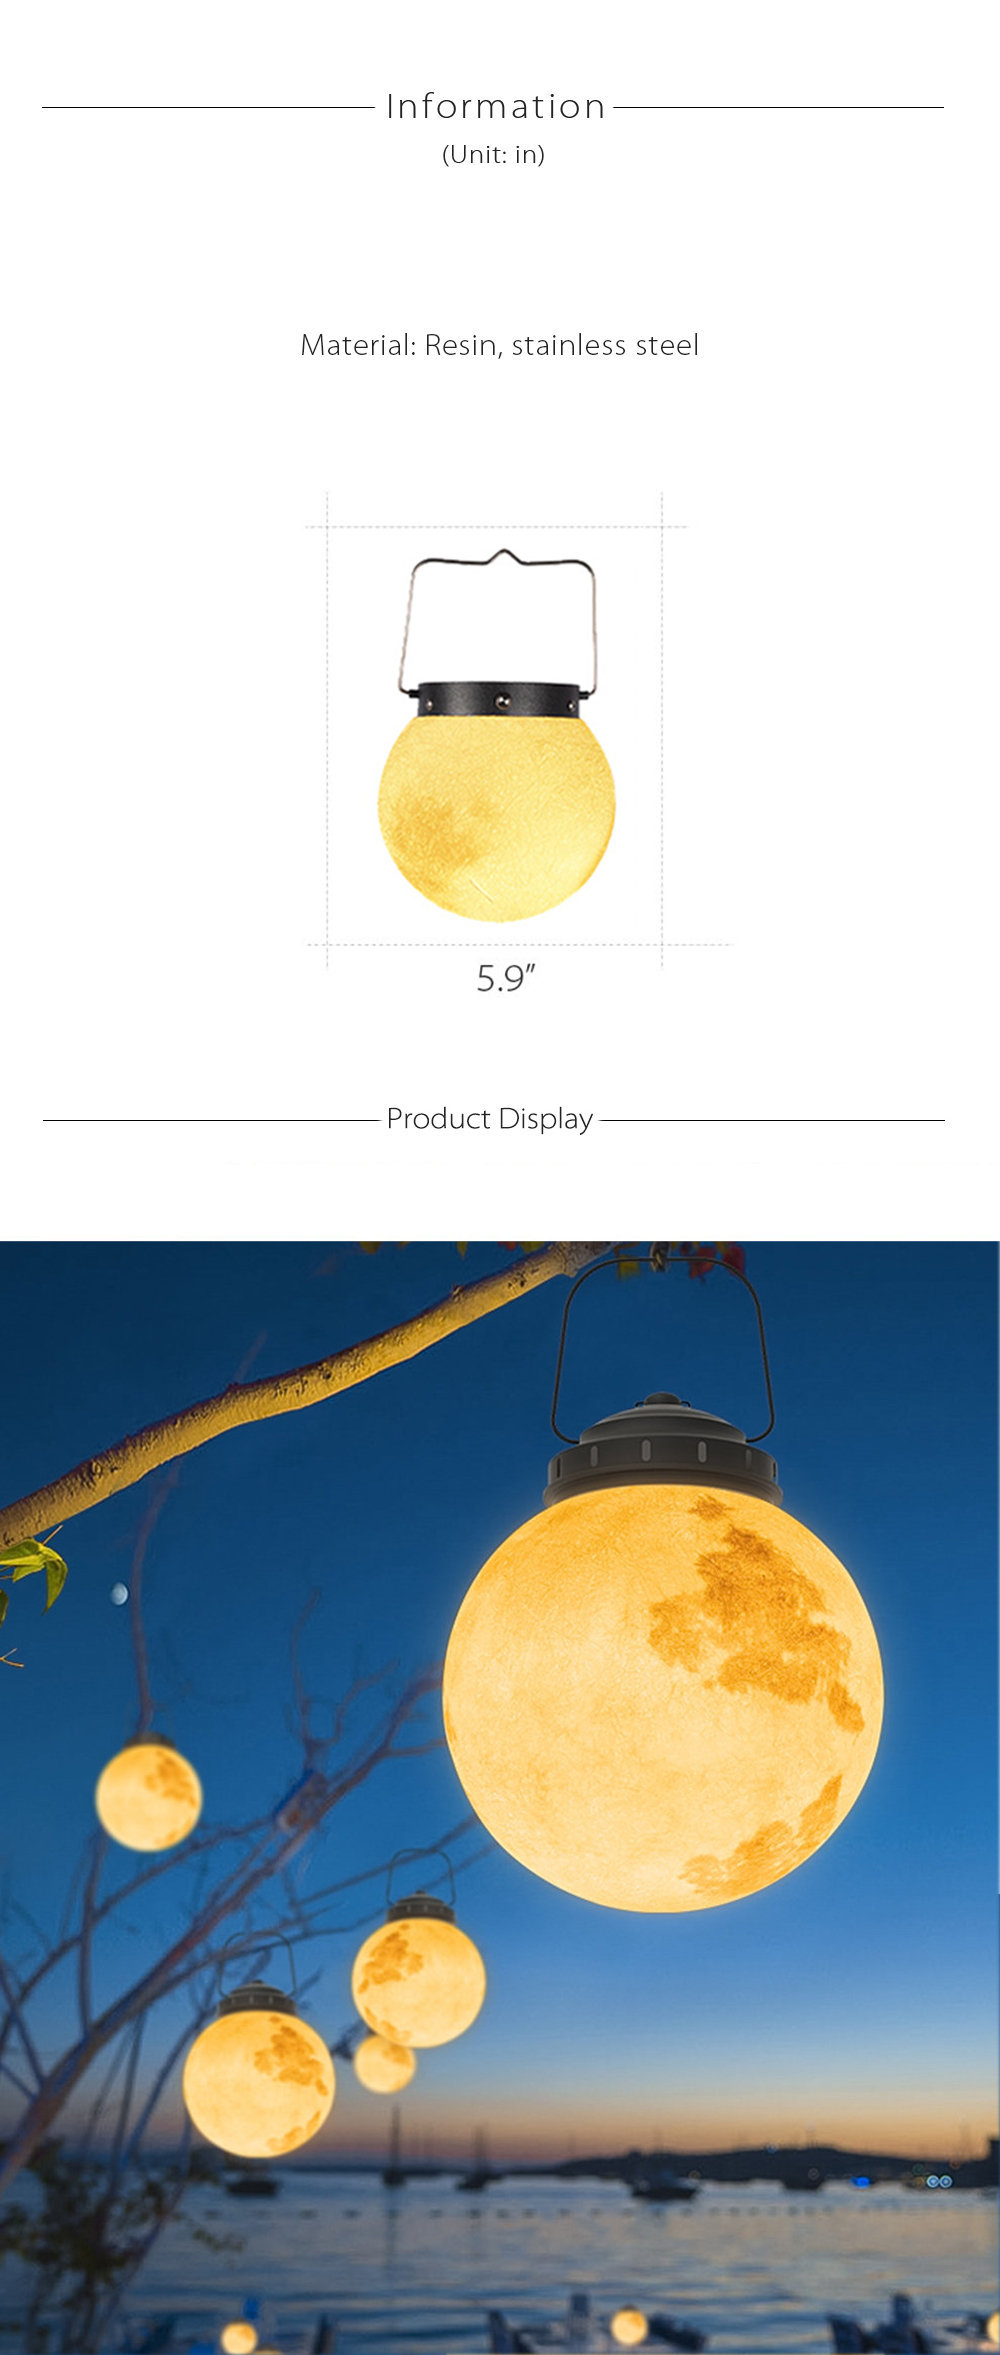 Hanging Moon Lamp - Resin - Fiberglass - 2 Sizes - Outdoor Garden -  ApolloBox